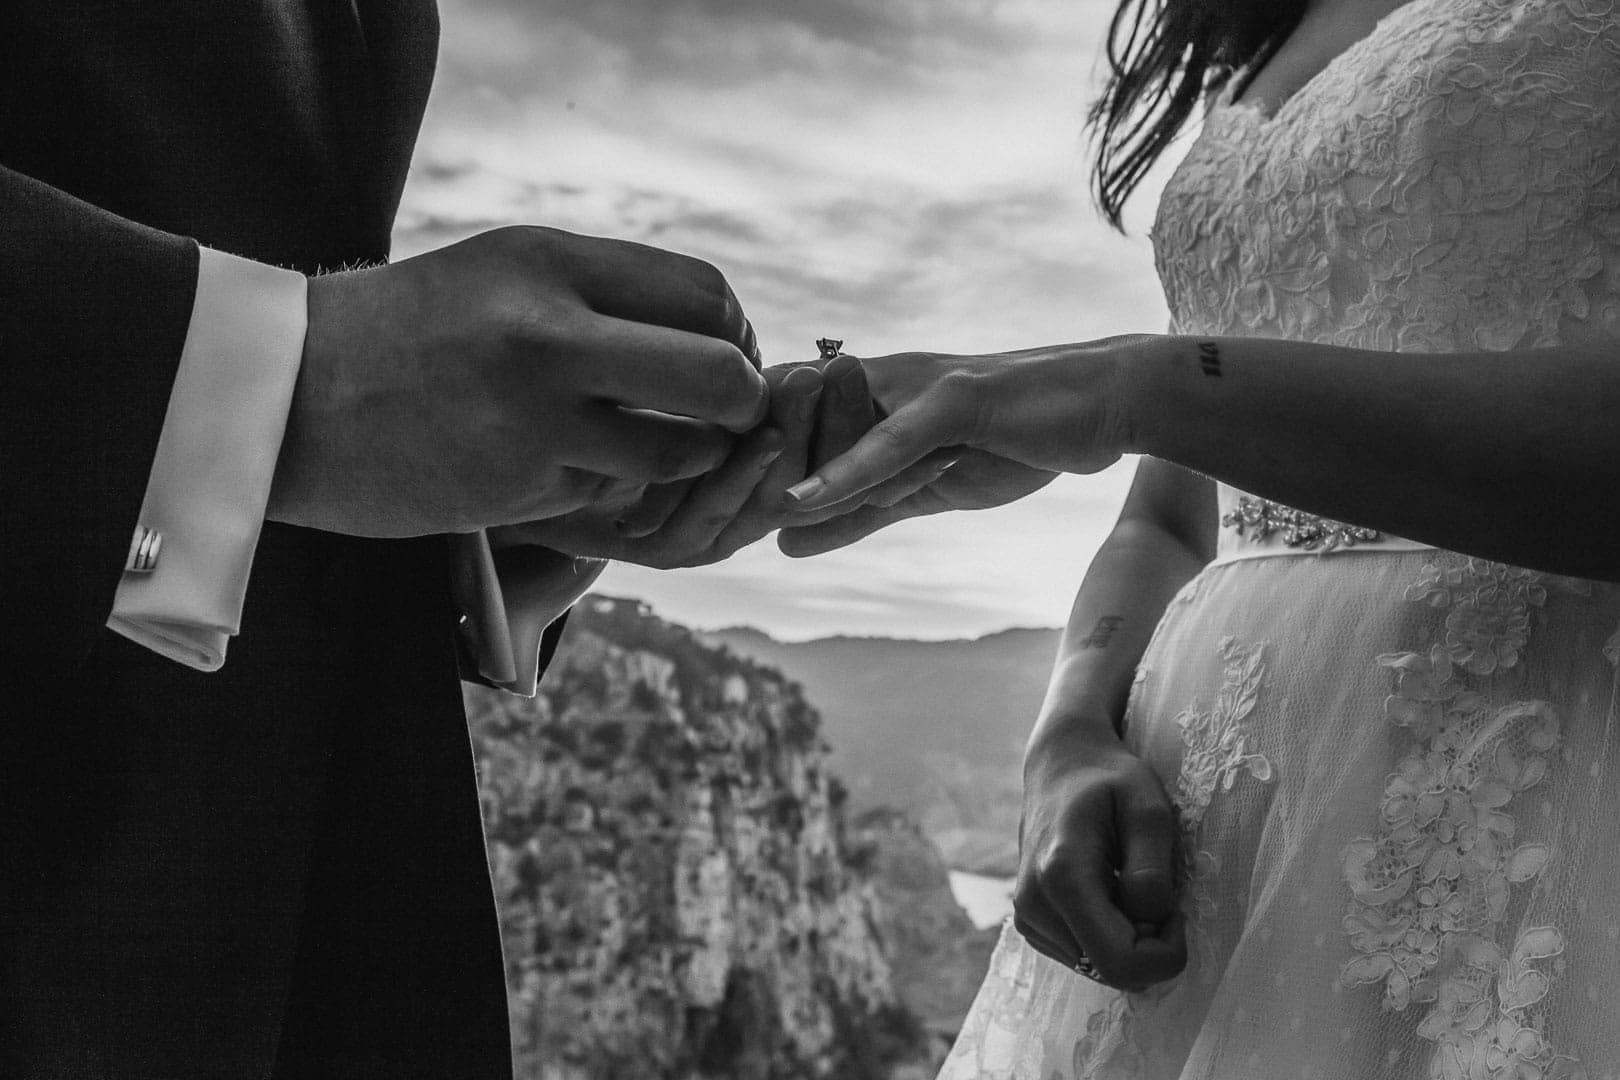 fotografia de detalle en el momento de la pedida en matrimonio en el hotel hacienda de na xamena en ibiza.fotografia bea bermejo photographer ibiza 2020 1